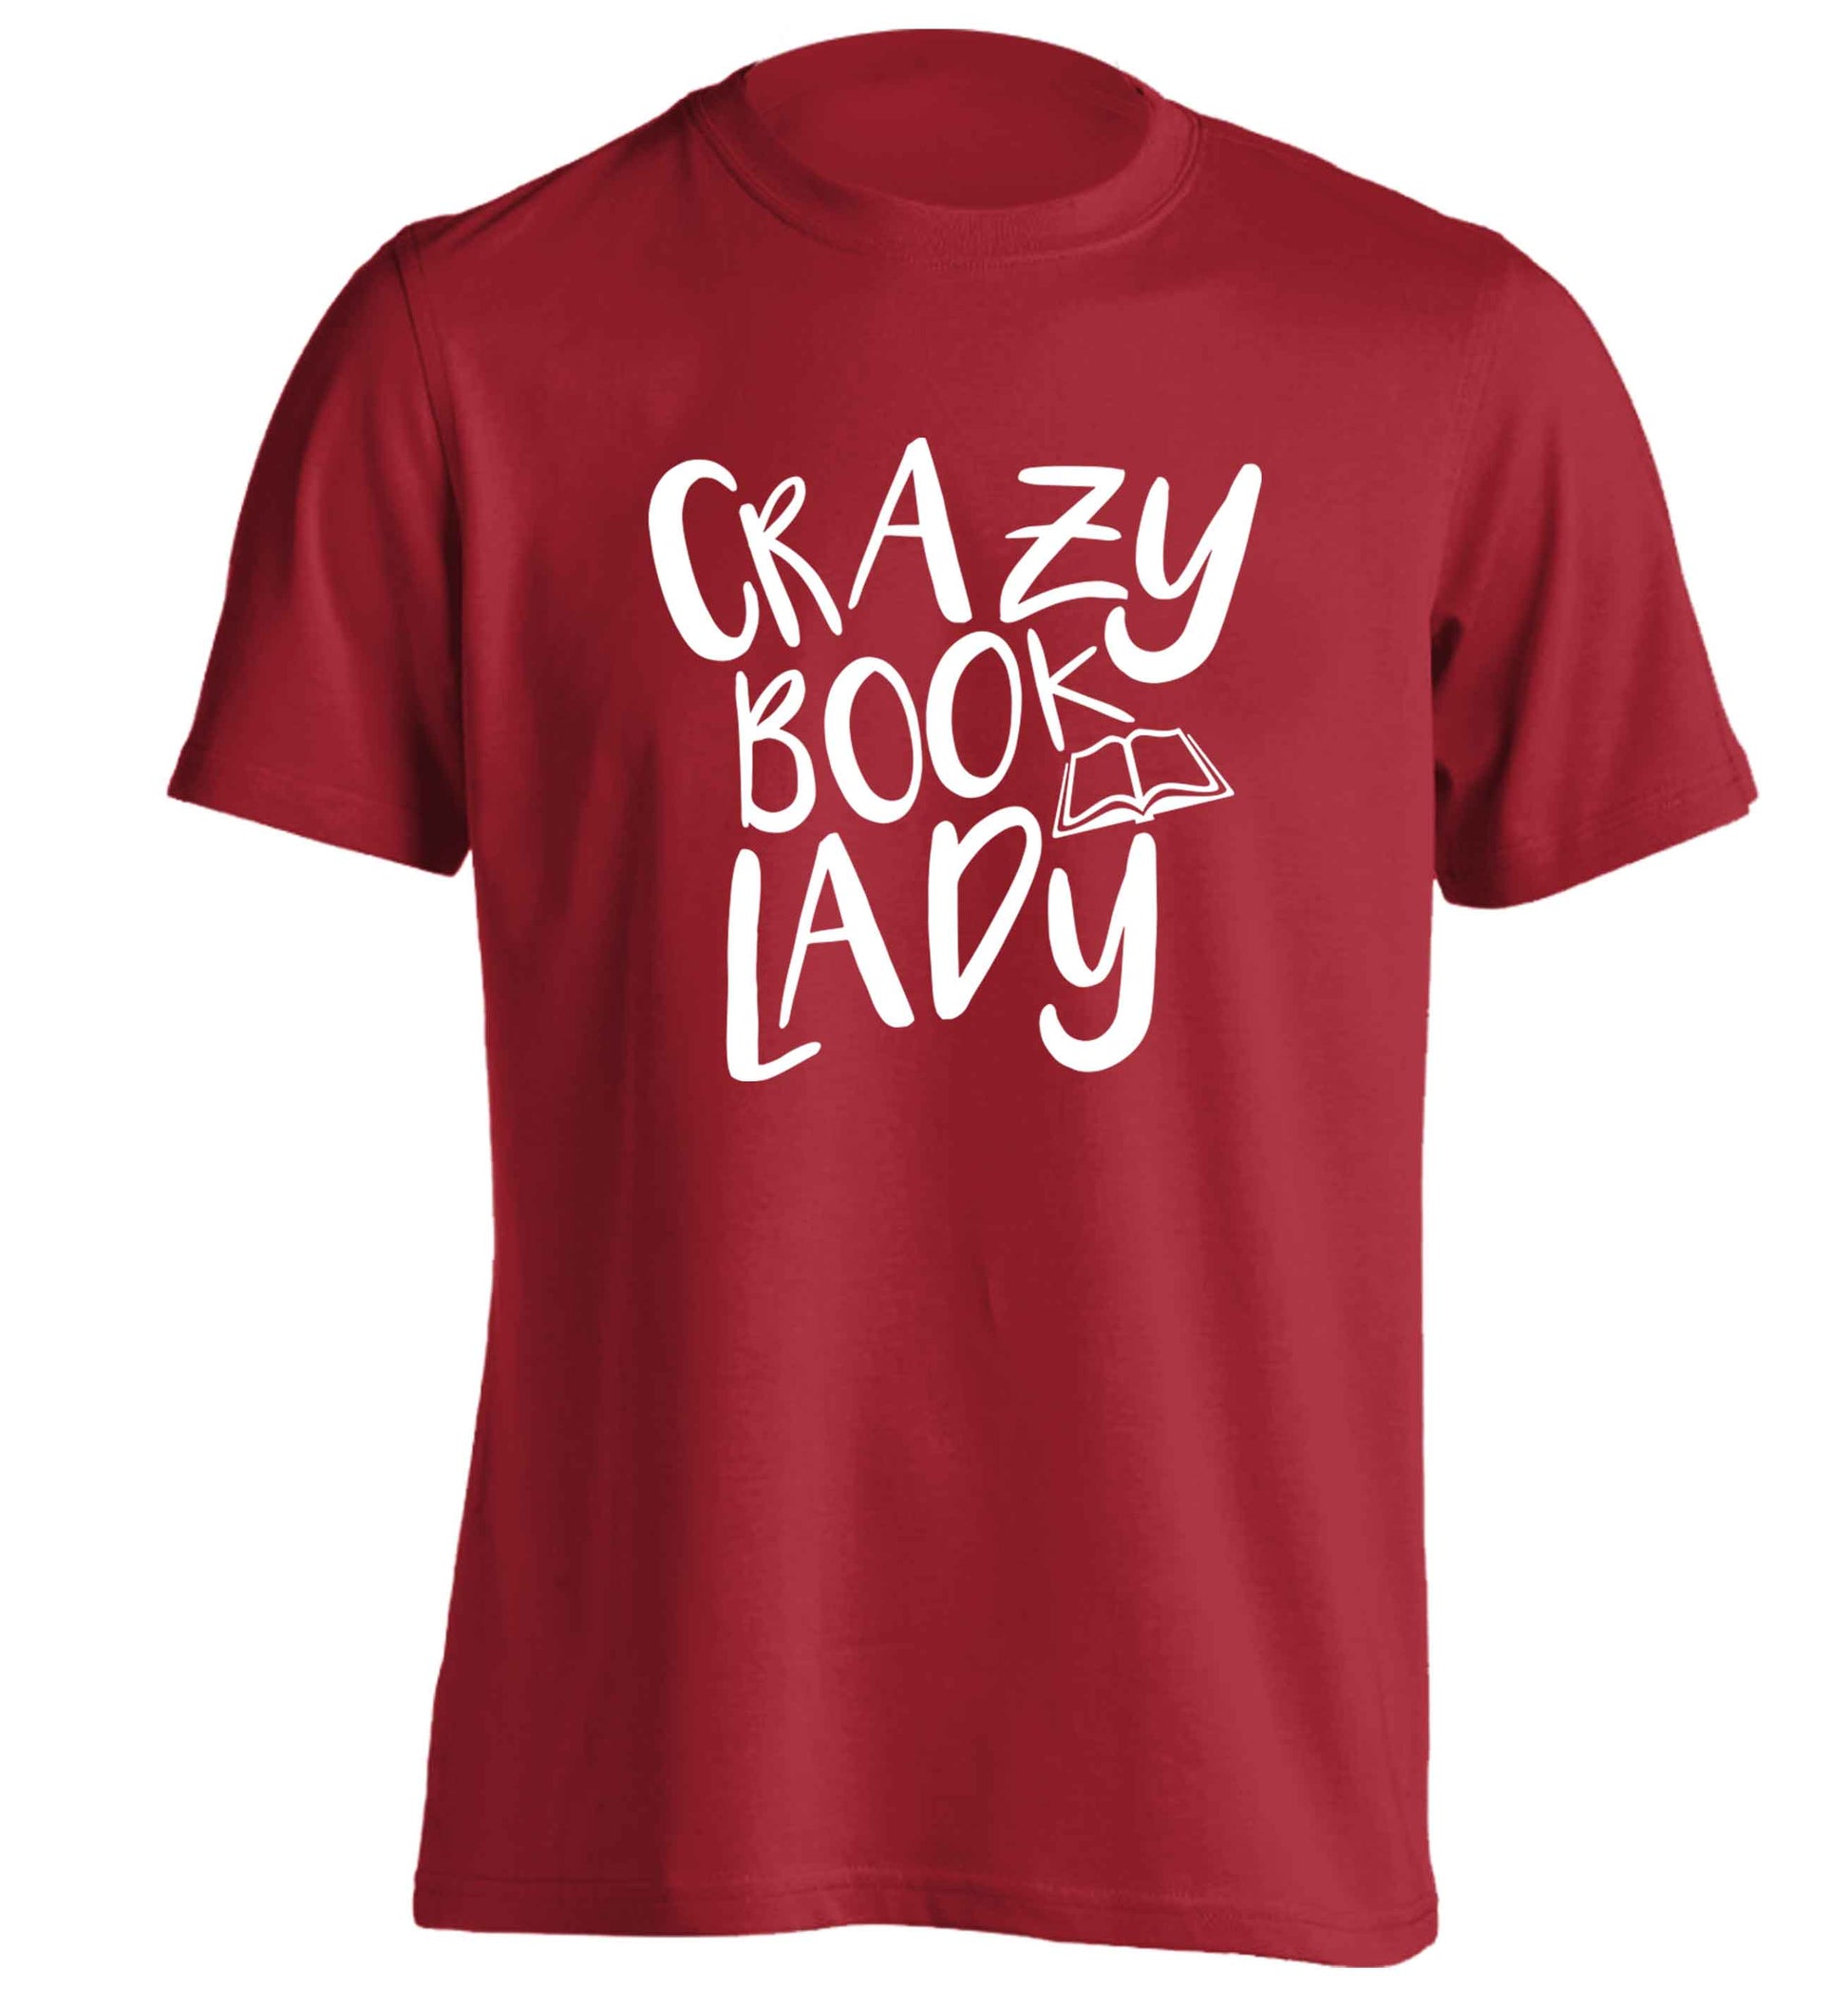 Crazy book lady adults unisex red Tshirt 2XL